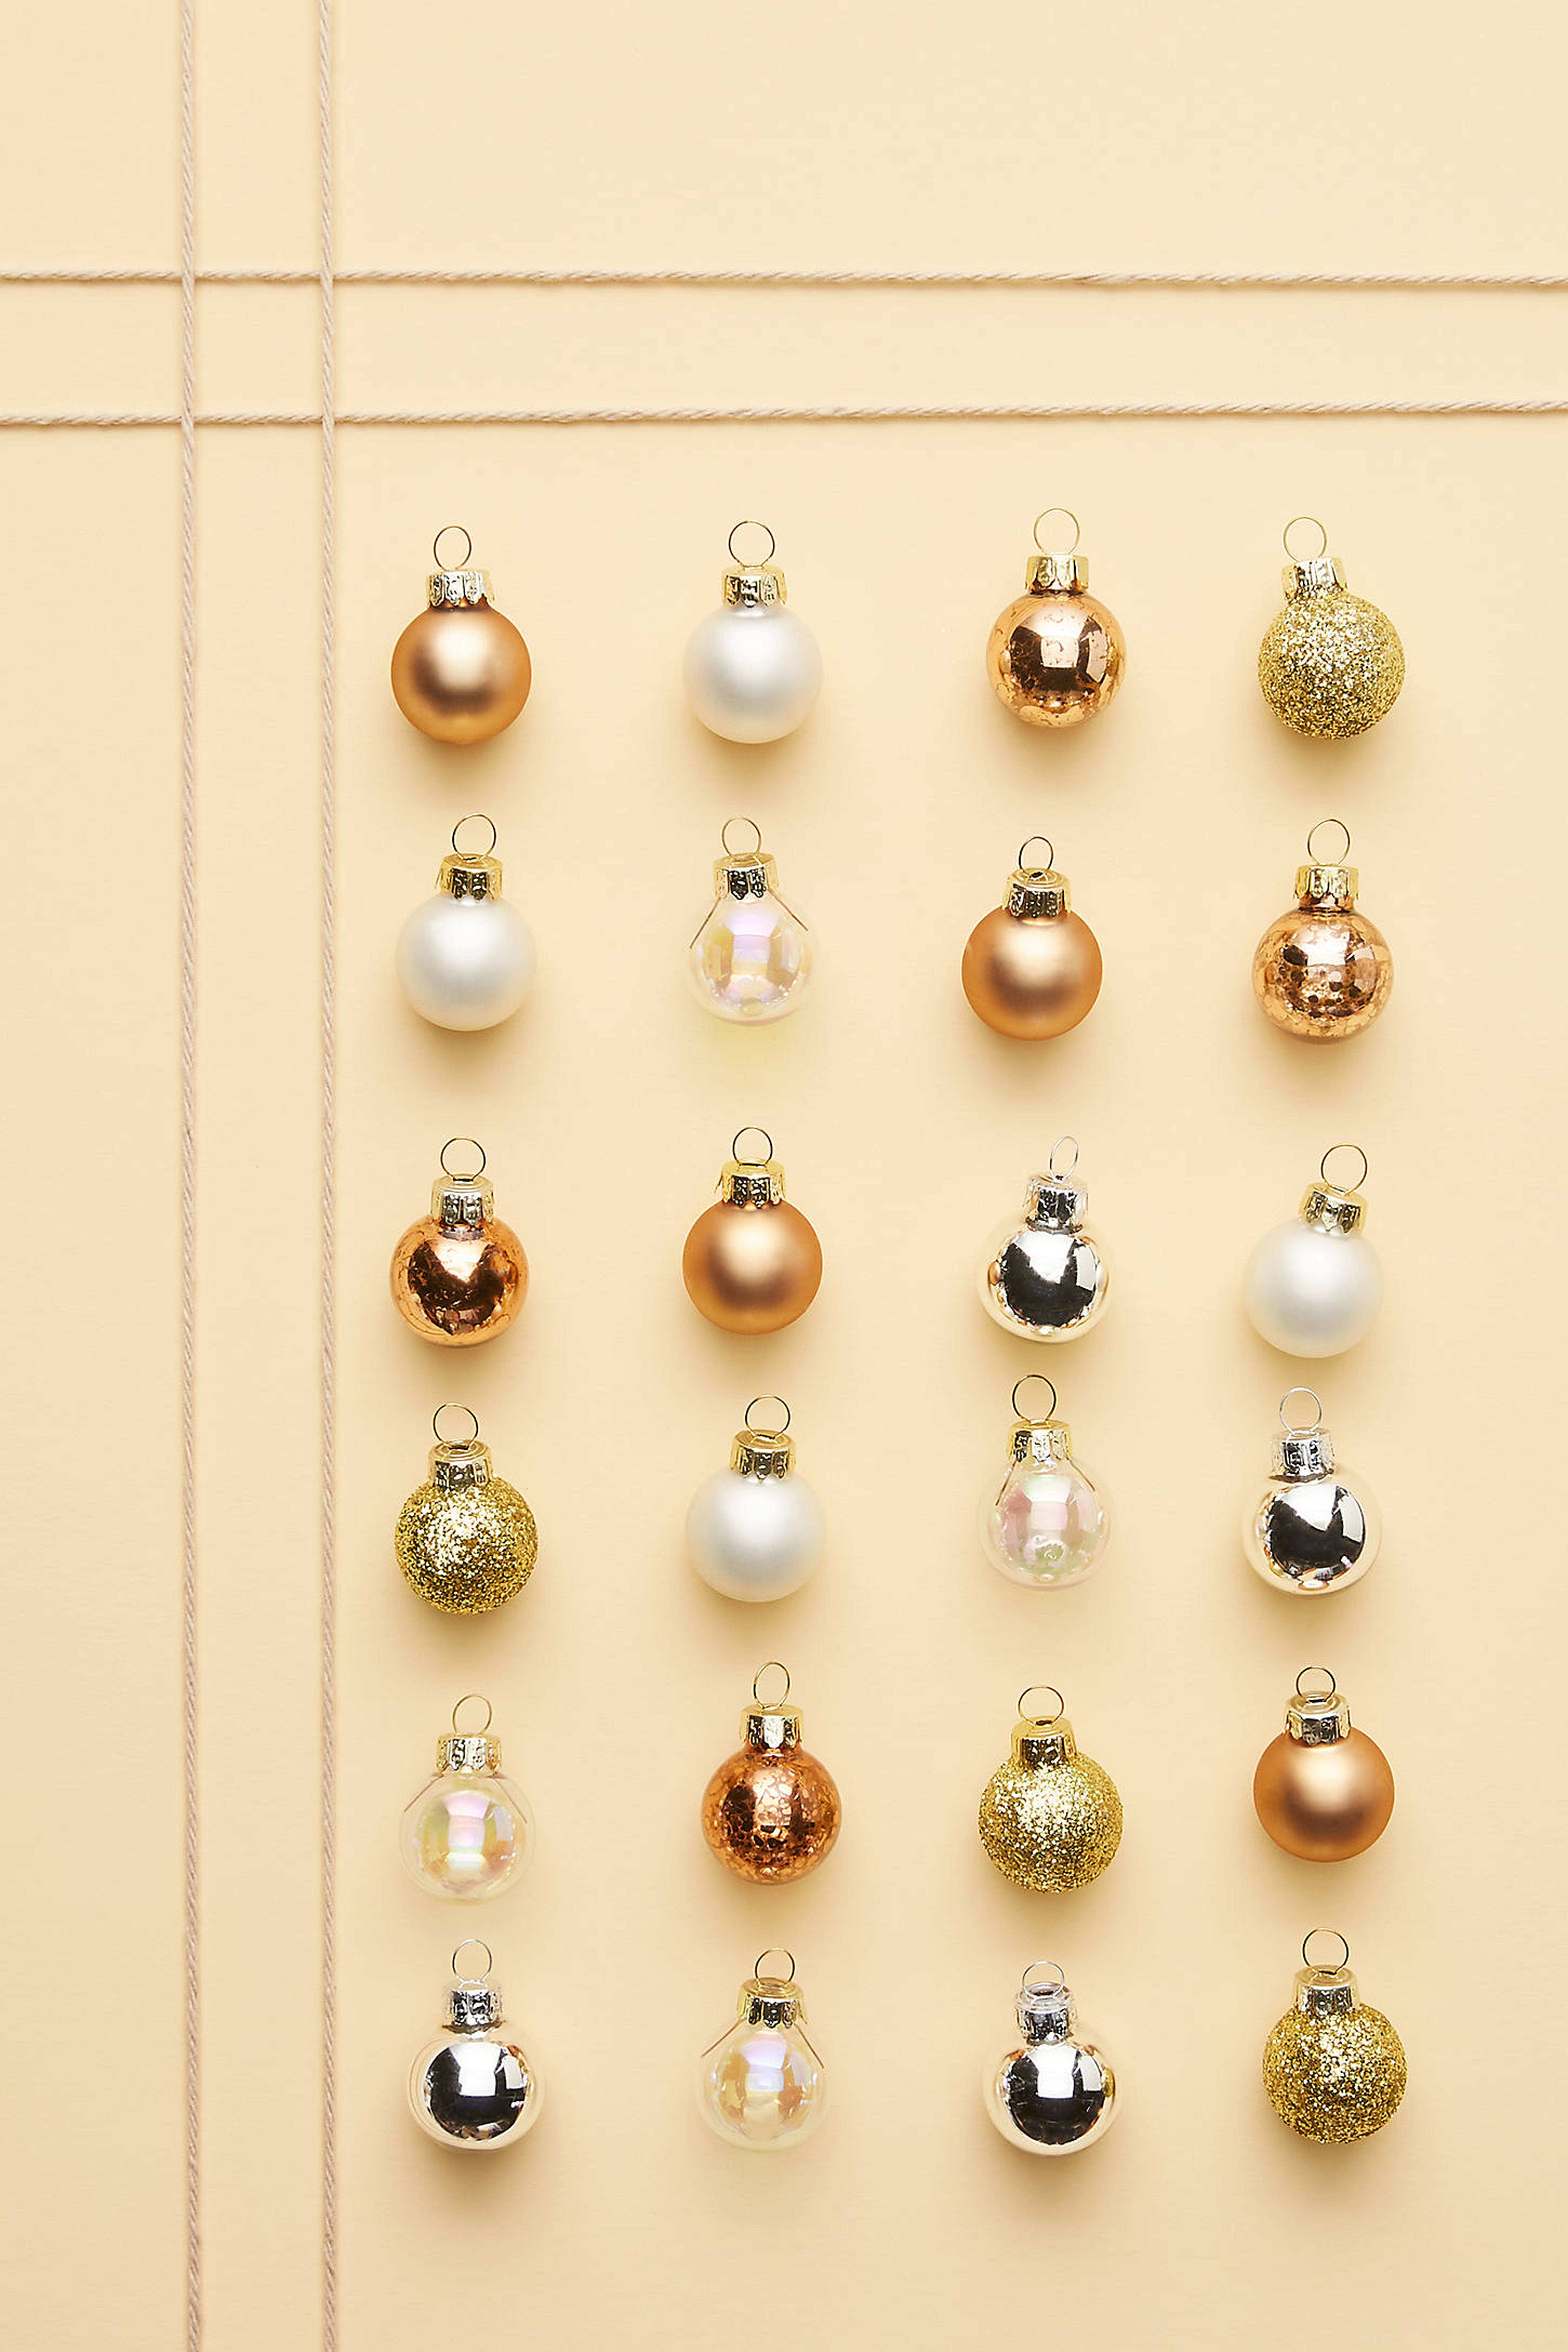 Copper Mini Ornaments, Set of 24 - Anthropologie